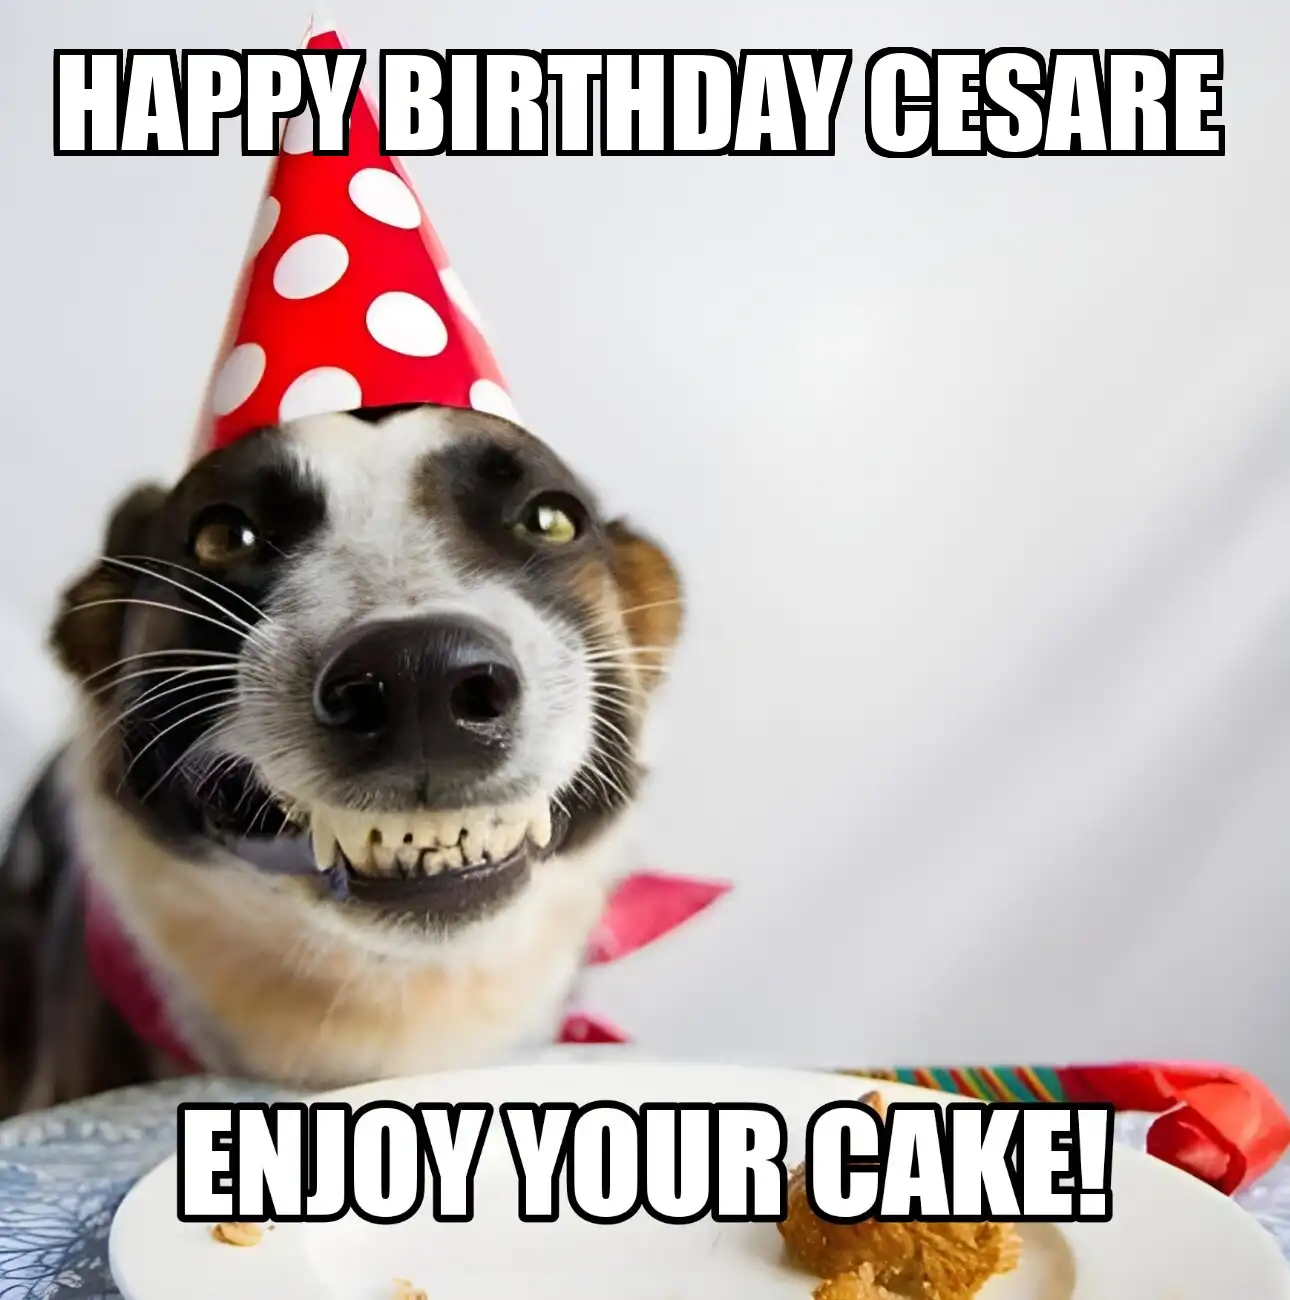 Happy Birthday Cesare Enjoy Your Cake Dog Meme